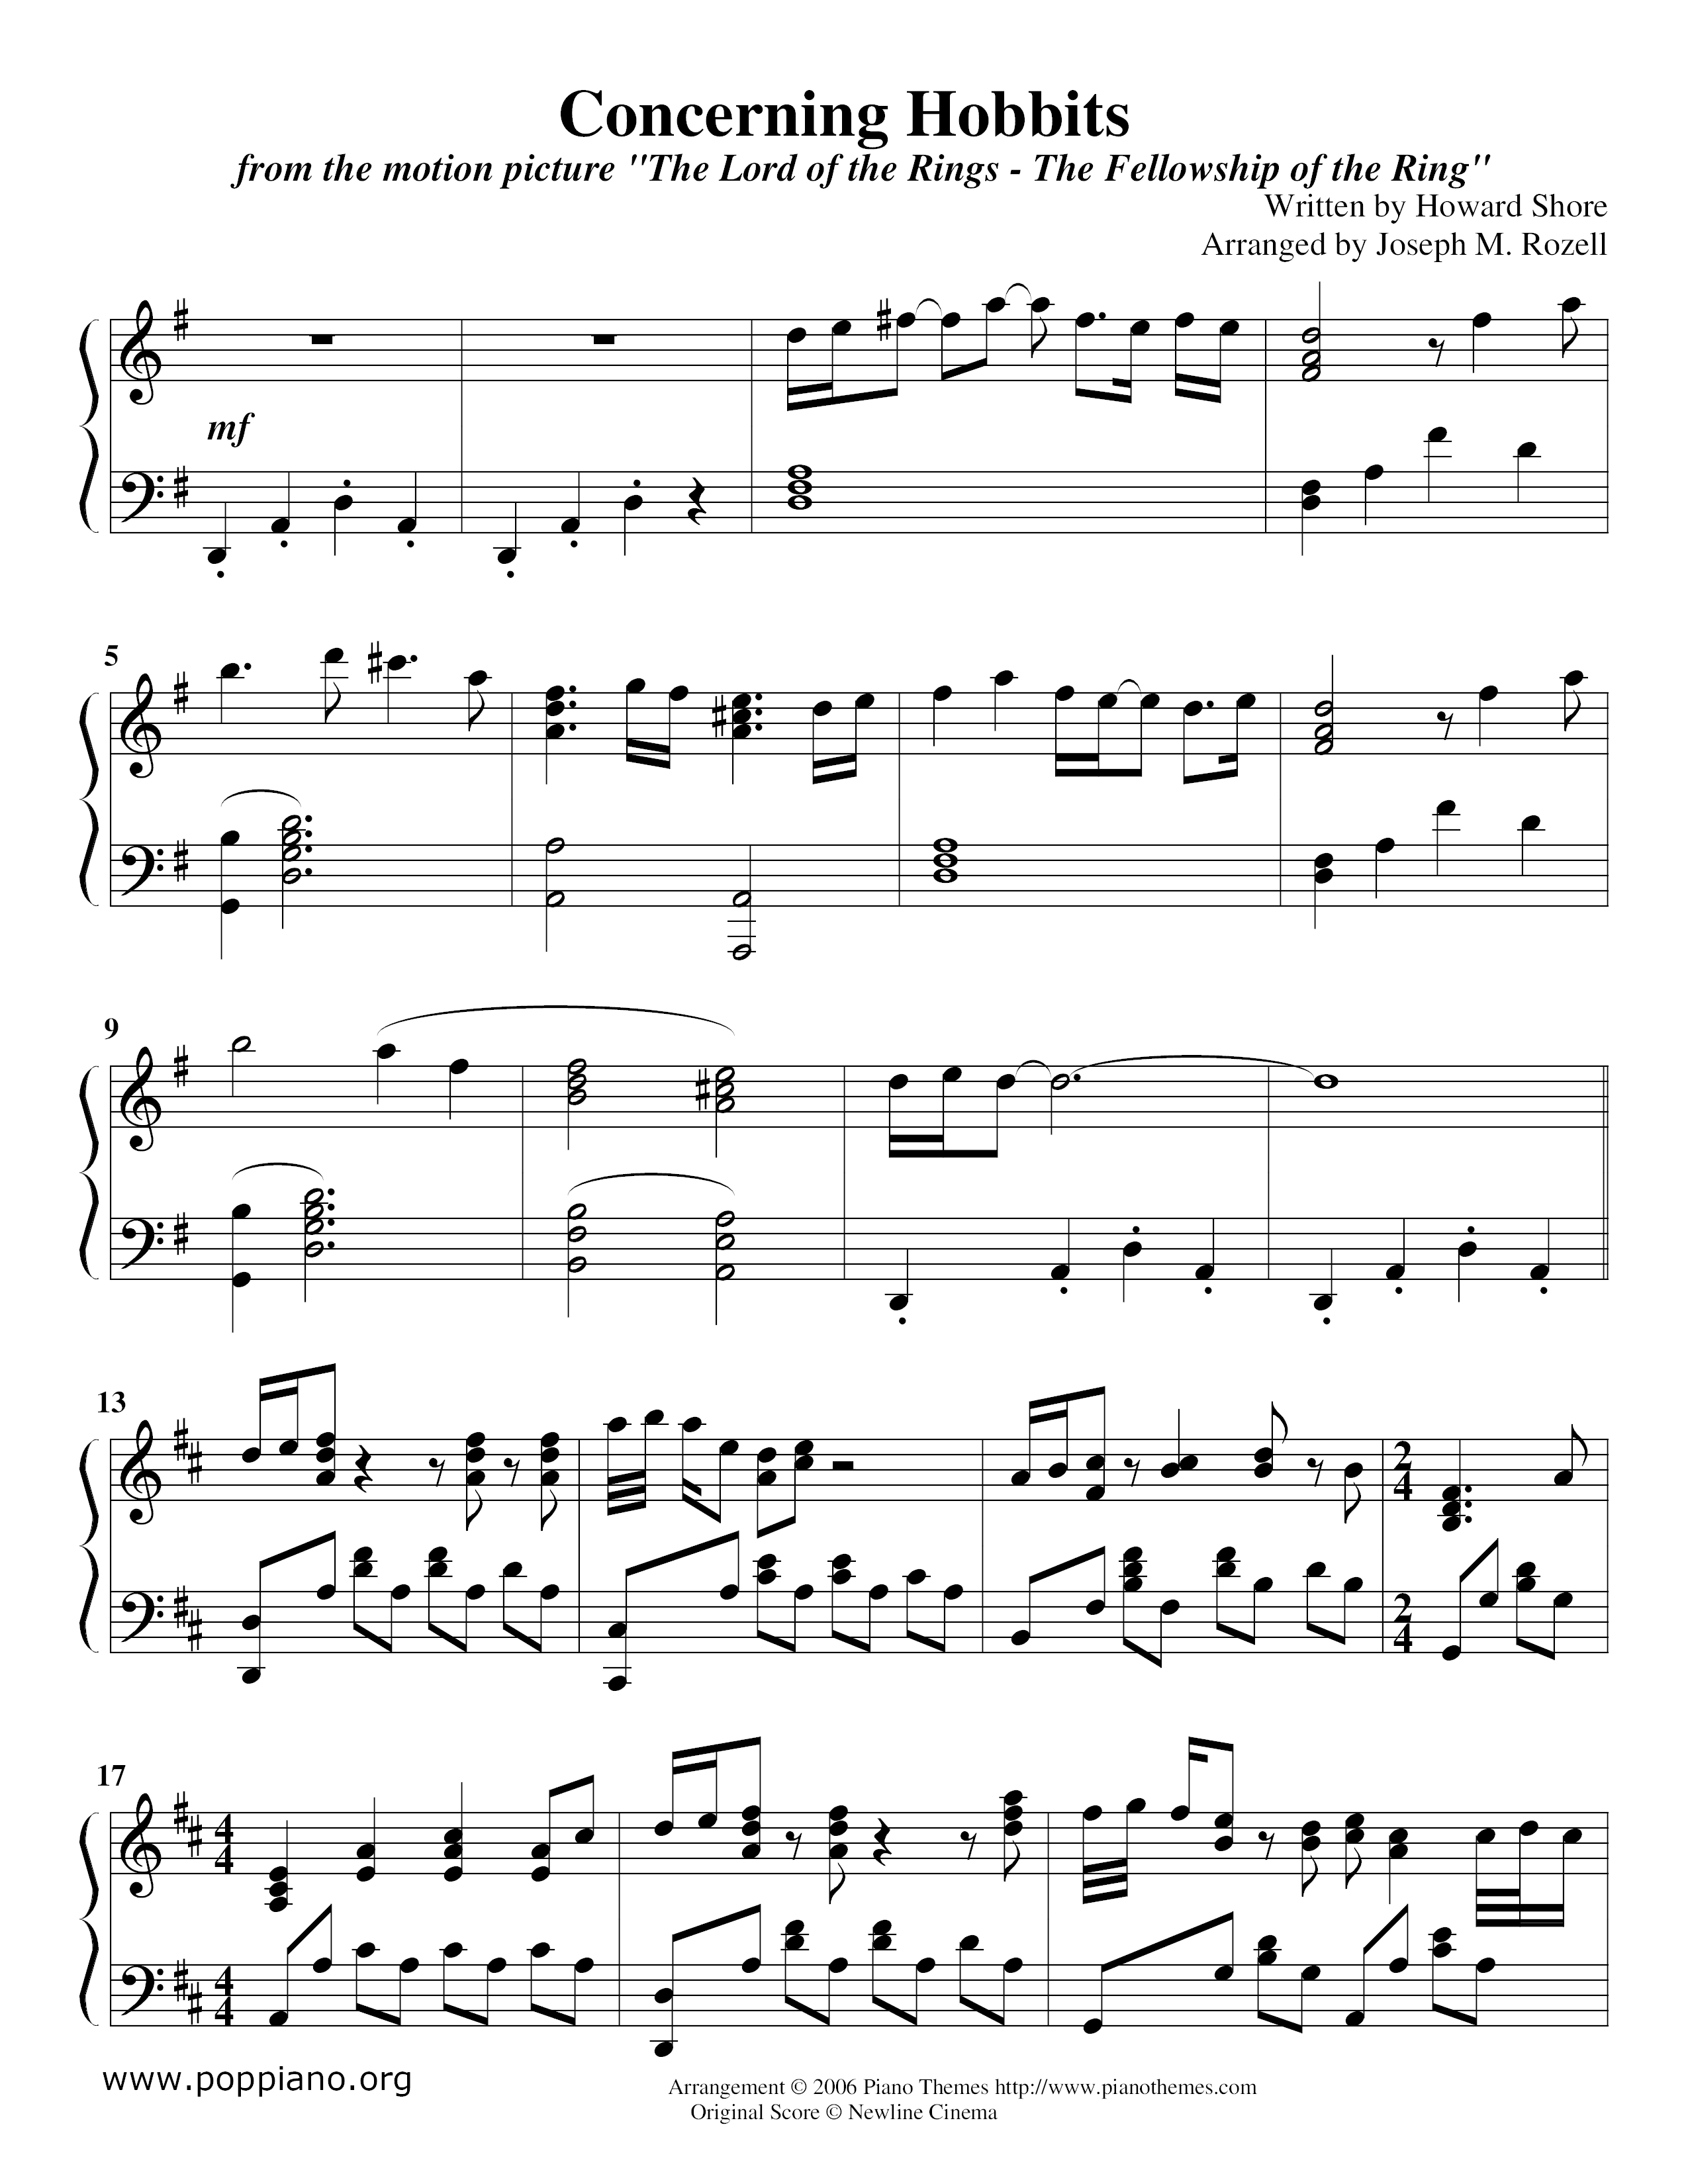 Concerning Hobbitsピアノ譜